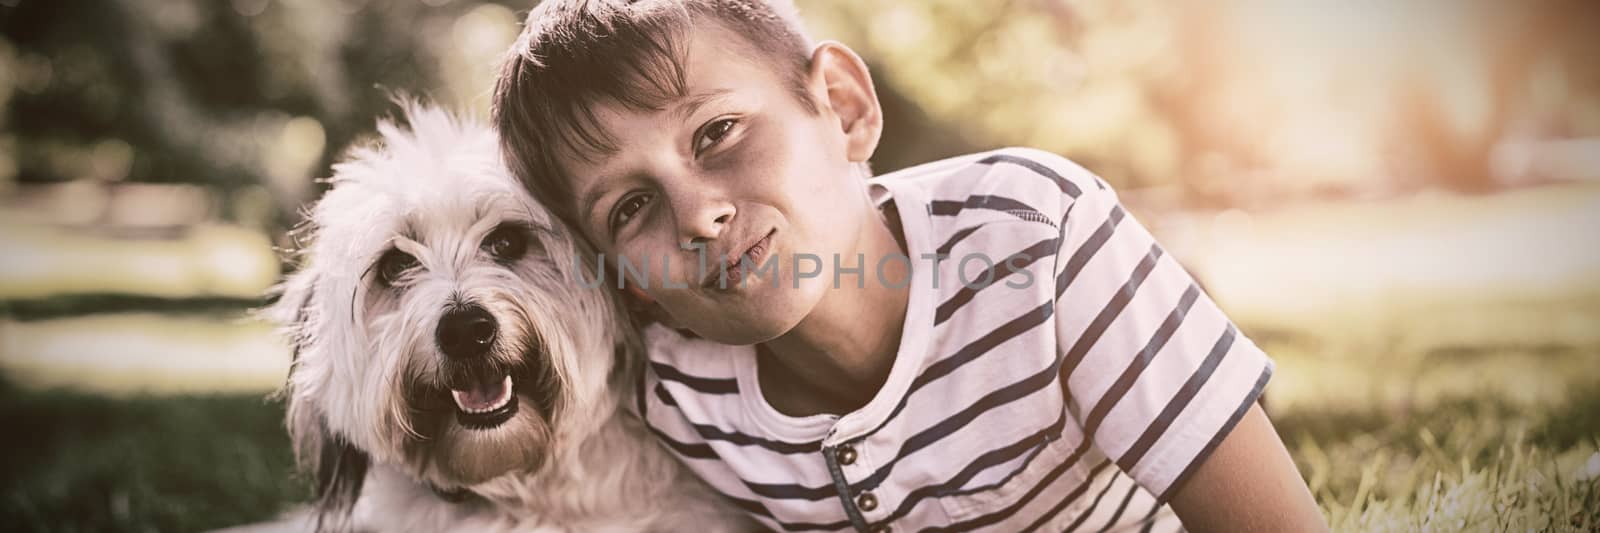 Portrait of boy with dog in park by Wavebreakmedia